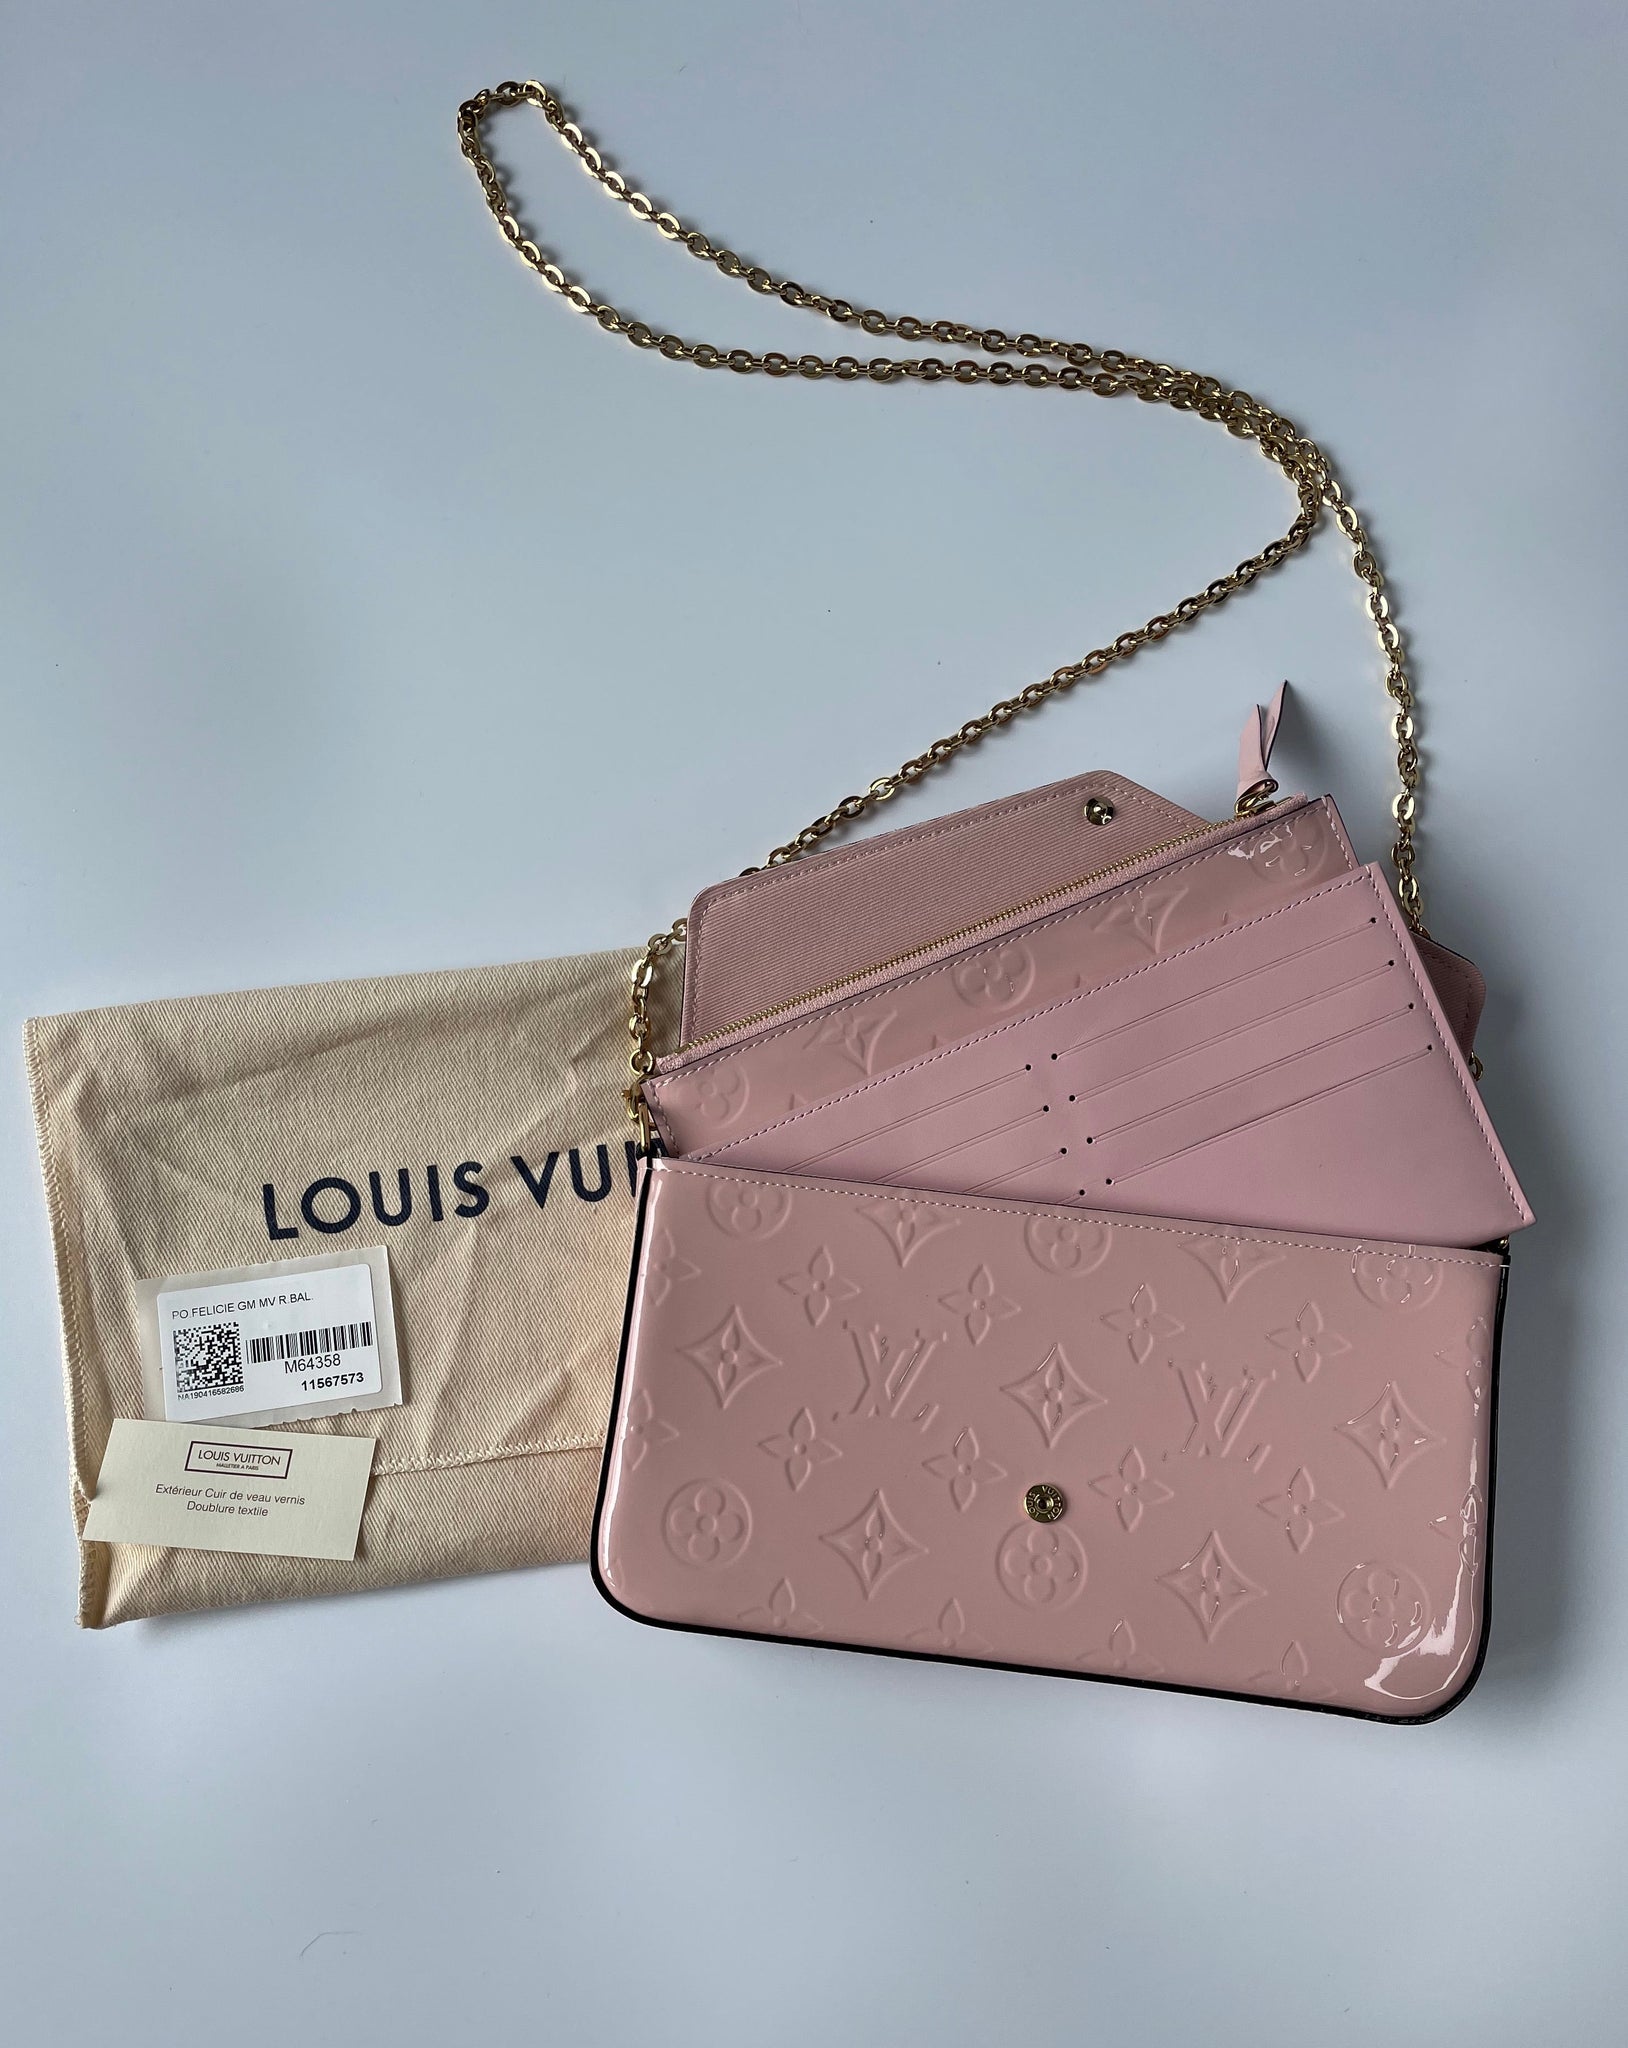 Should I keep the LV Felicie Pochette? : r/Louisvuitton